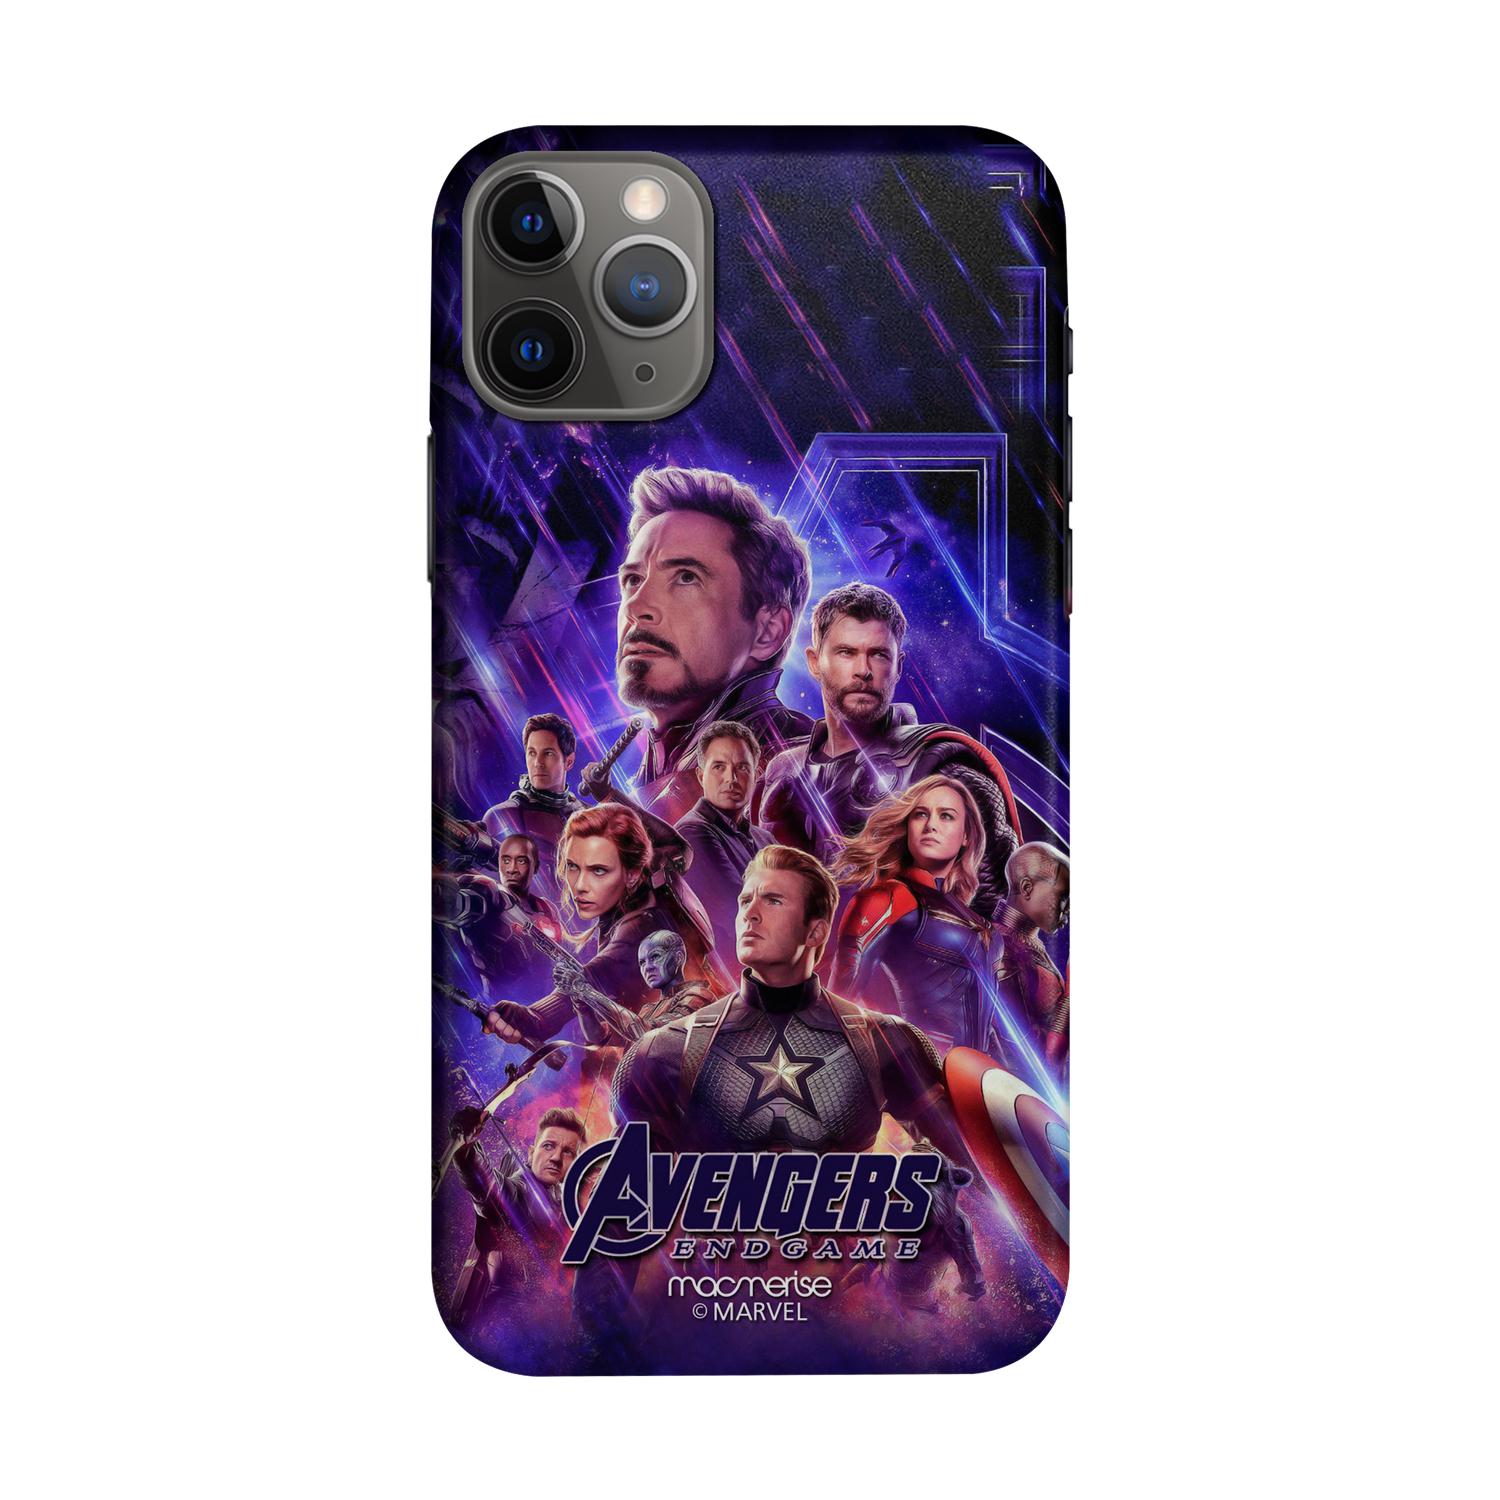 Avengers Endgame Poster - Sleek Phone Case for iPhone 11 Pro Max